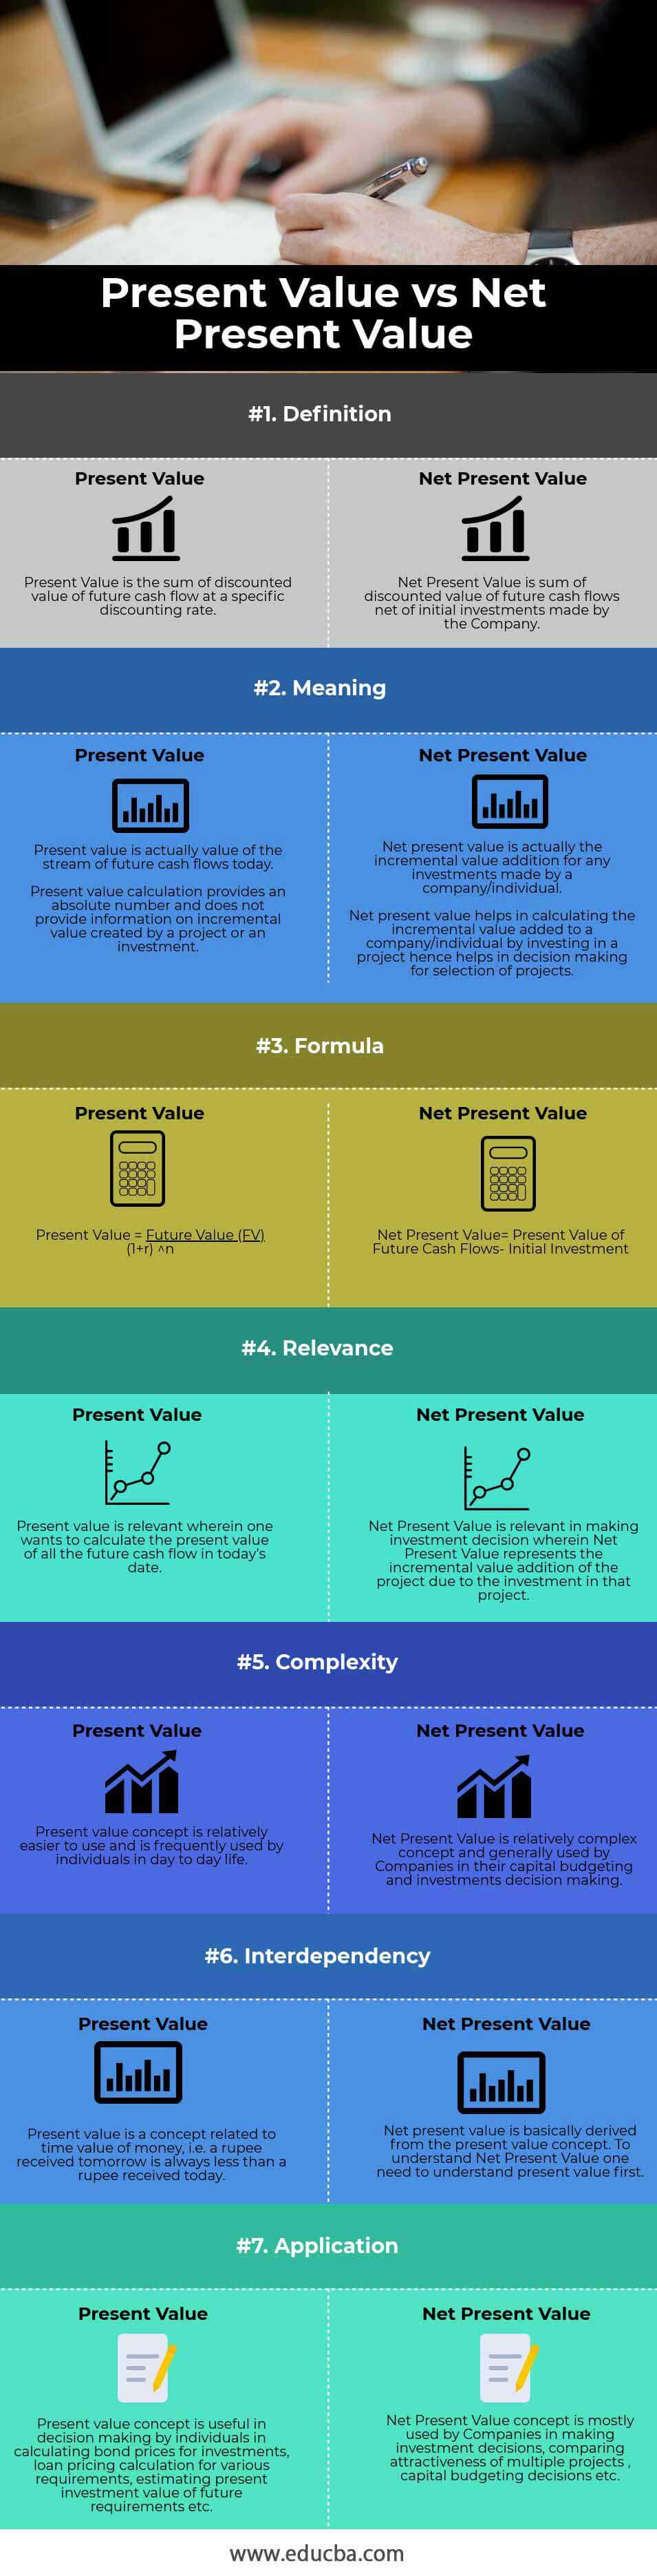 Present-Value-vs-Net-Present-Value-info